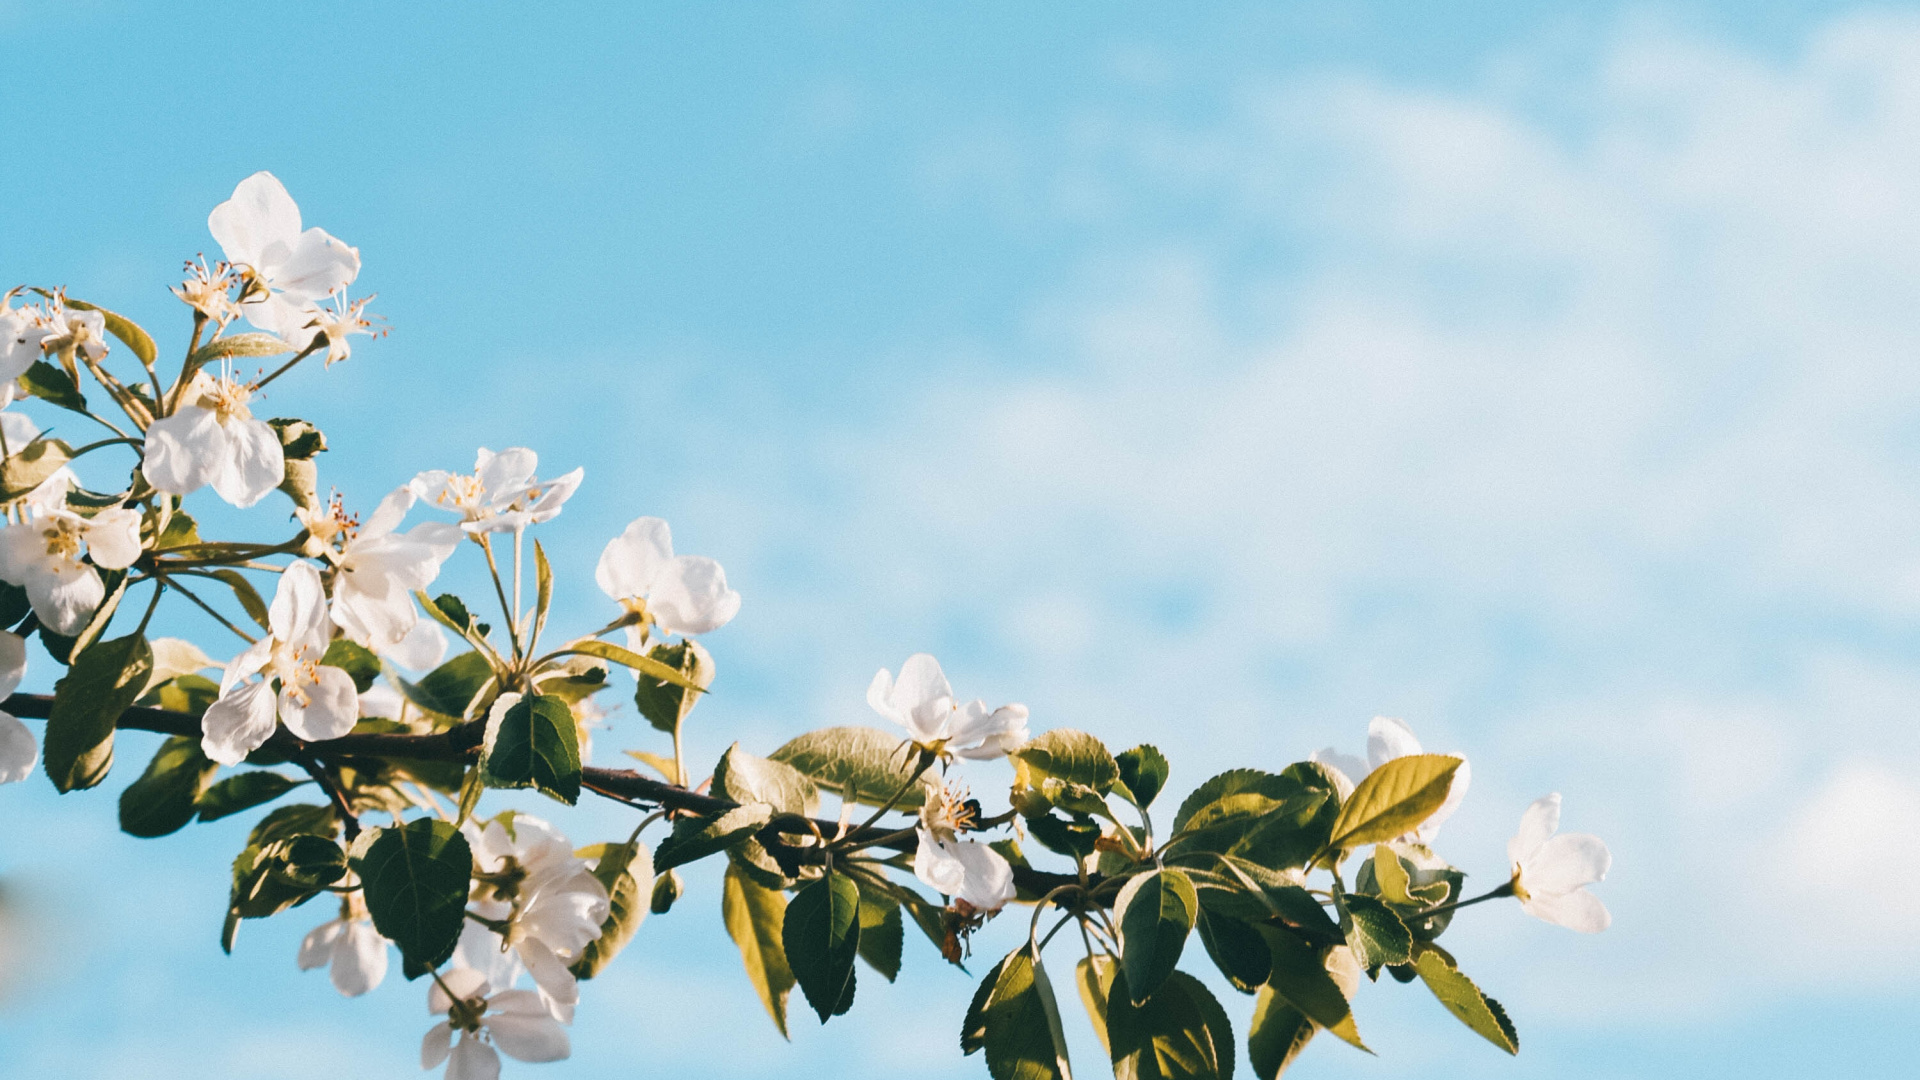 White Cherry Blossom Under Blue Sky During Daytime. Wallpaper in 1920x1080 Resolution